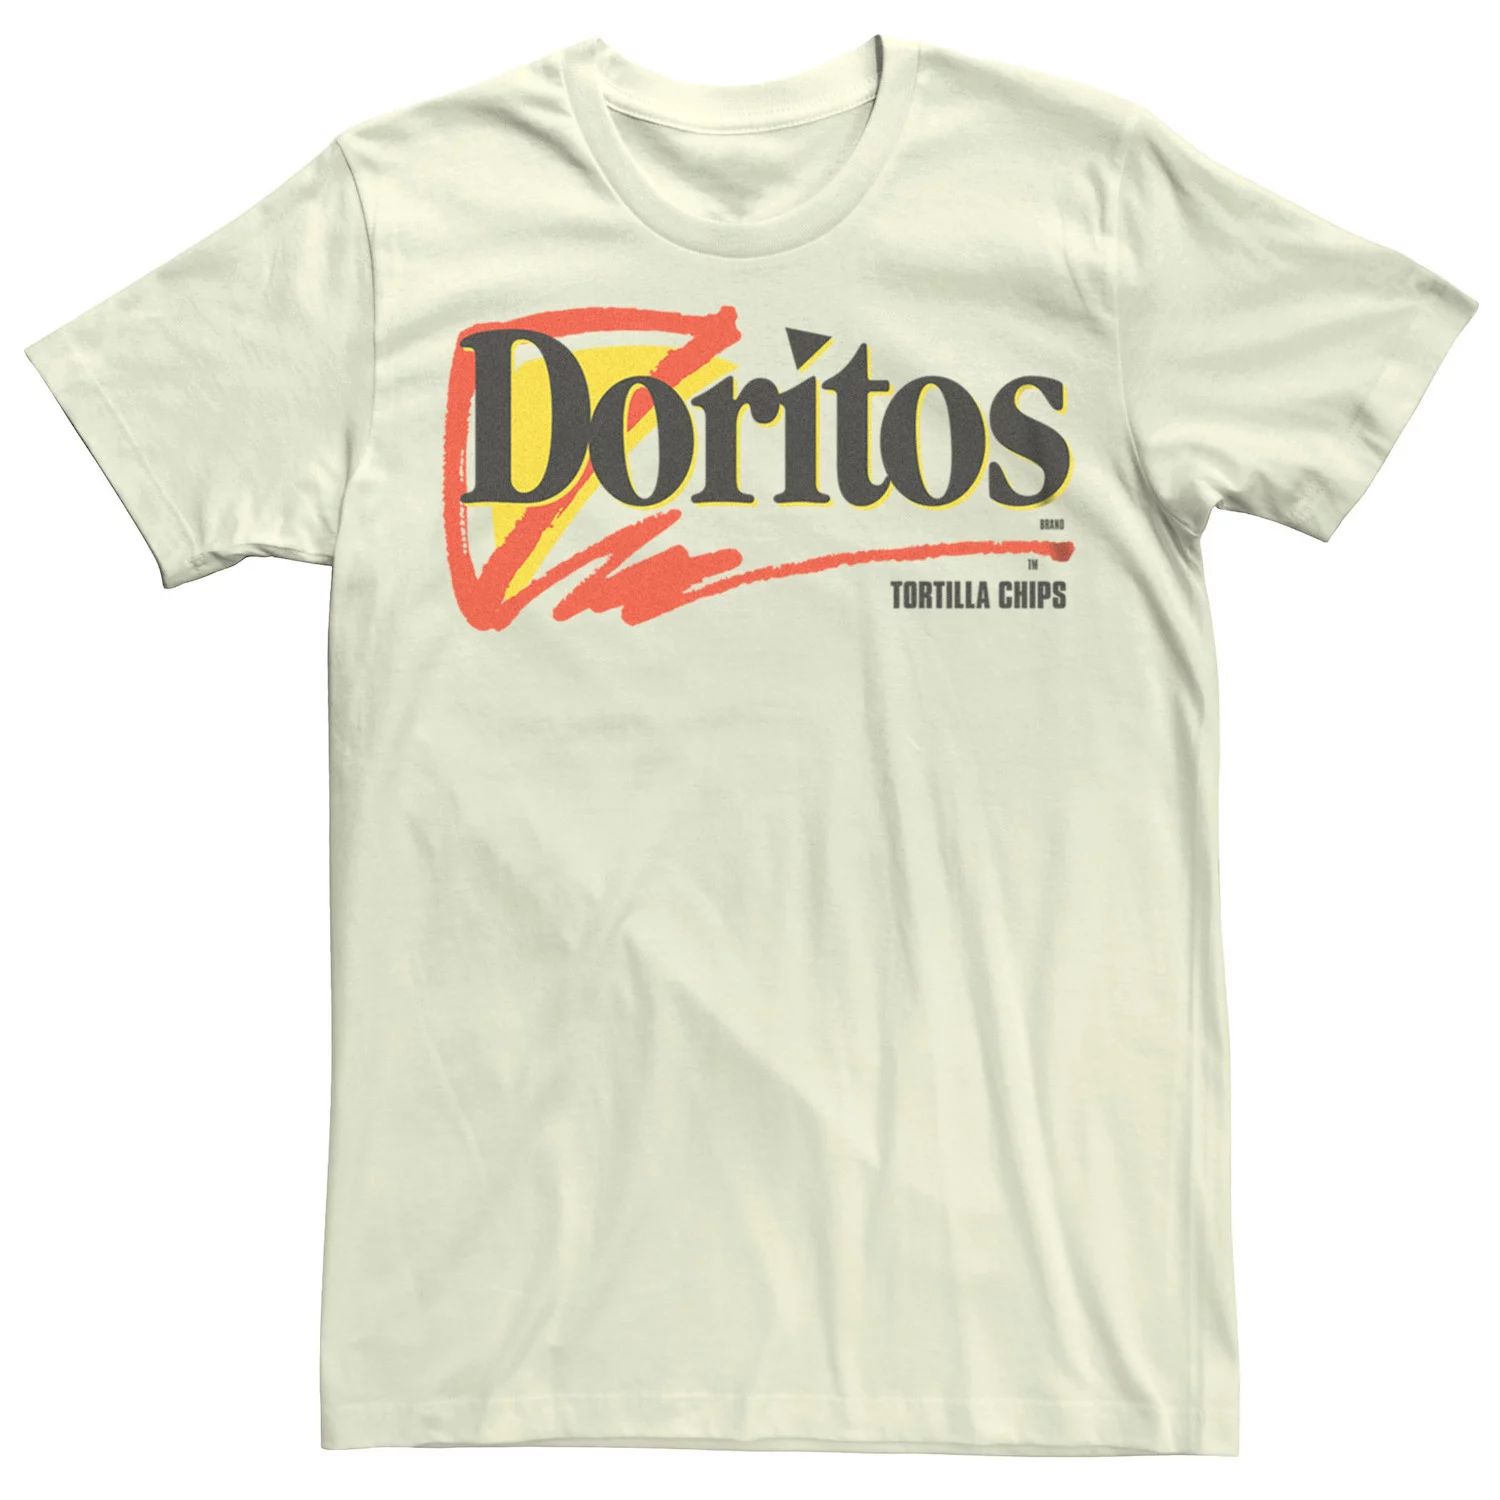 Мужская футболка с логотипом Doritos Tortilla Chips Licensed Character mister freed tortilla chips blue maize 135g